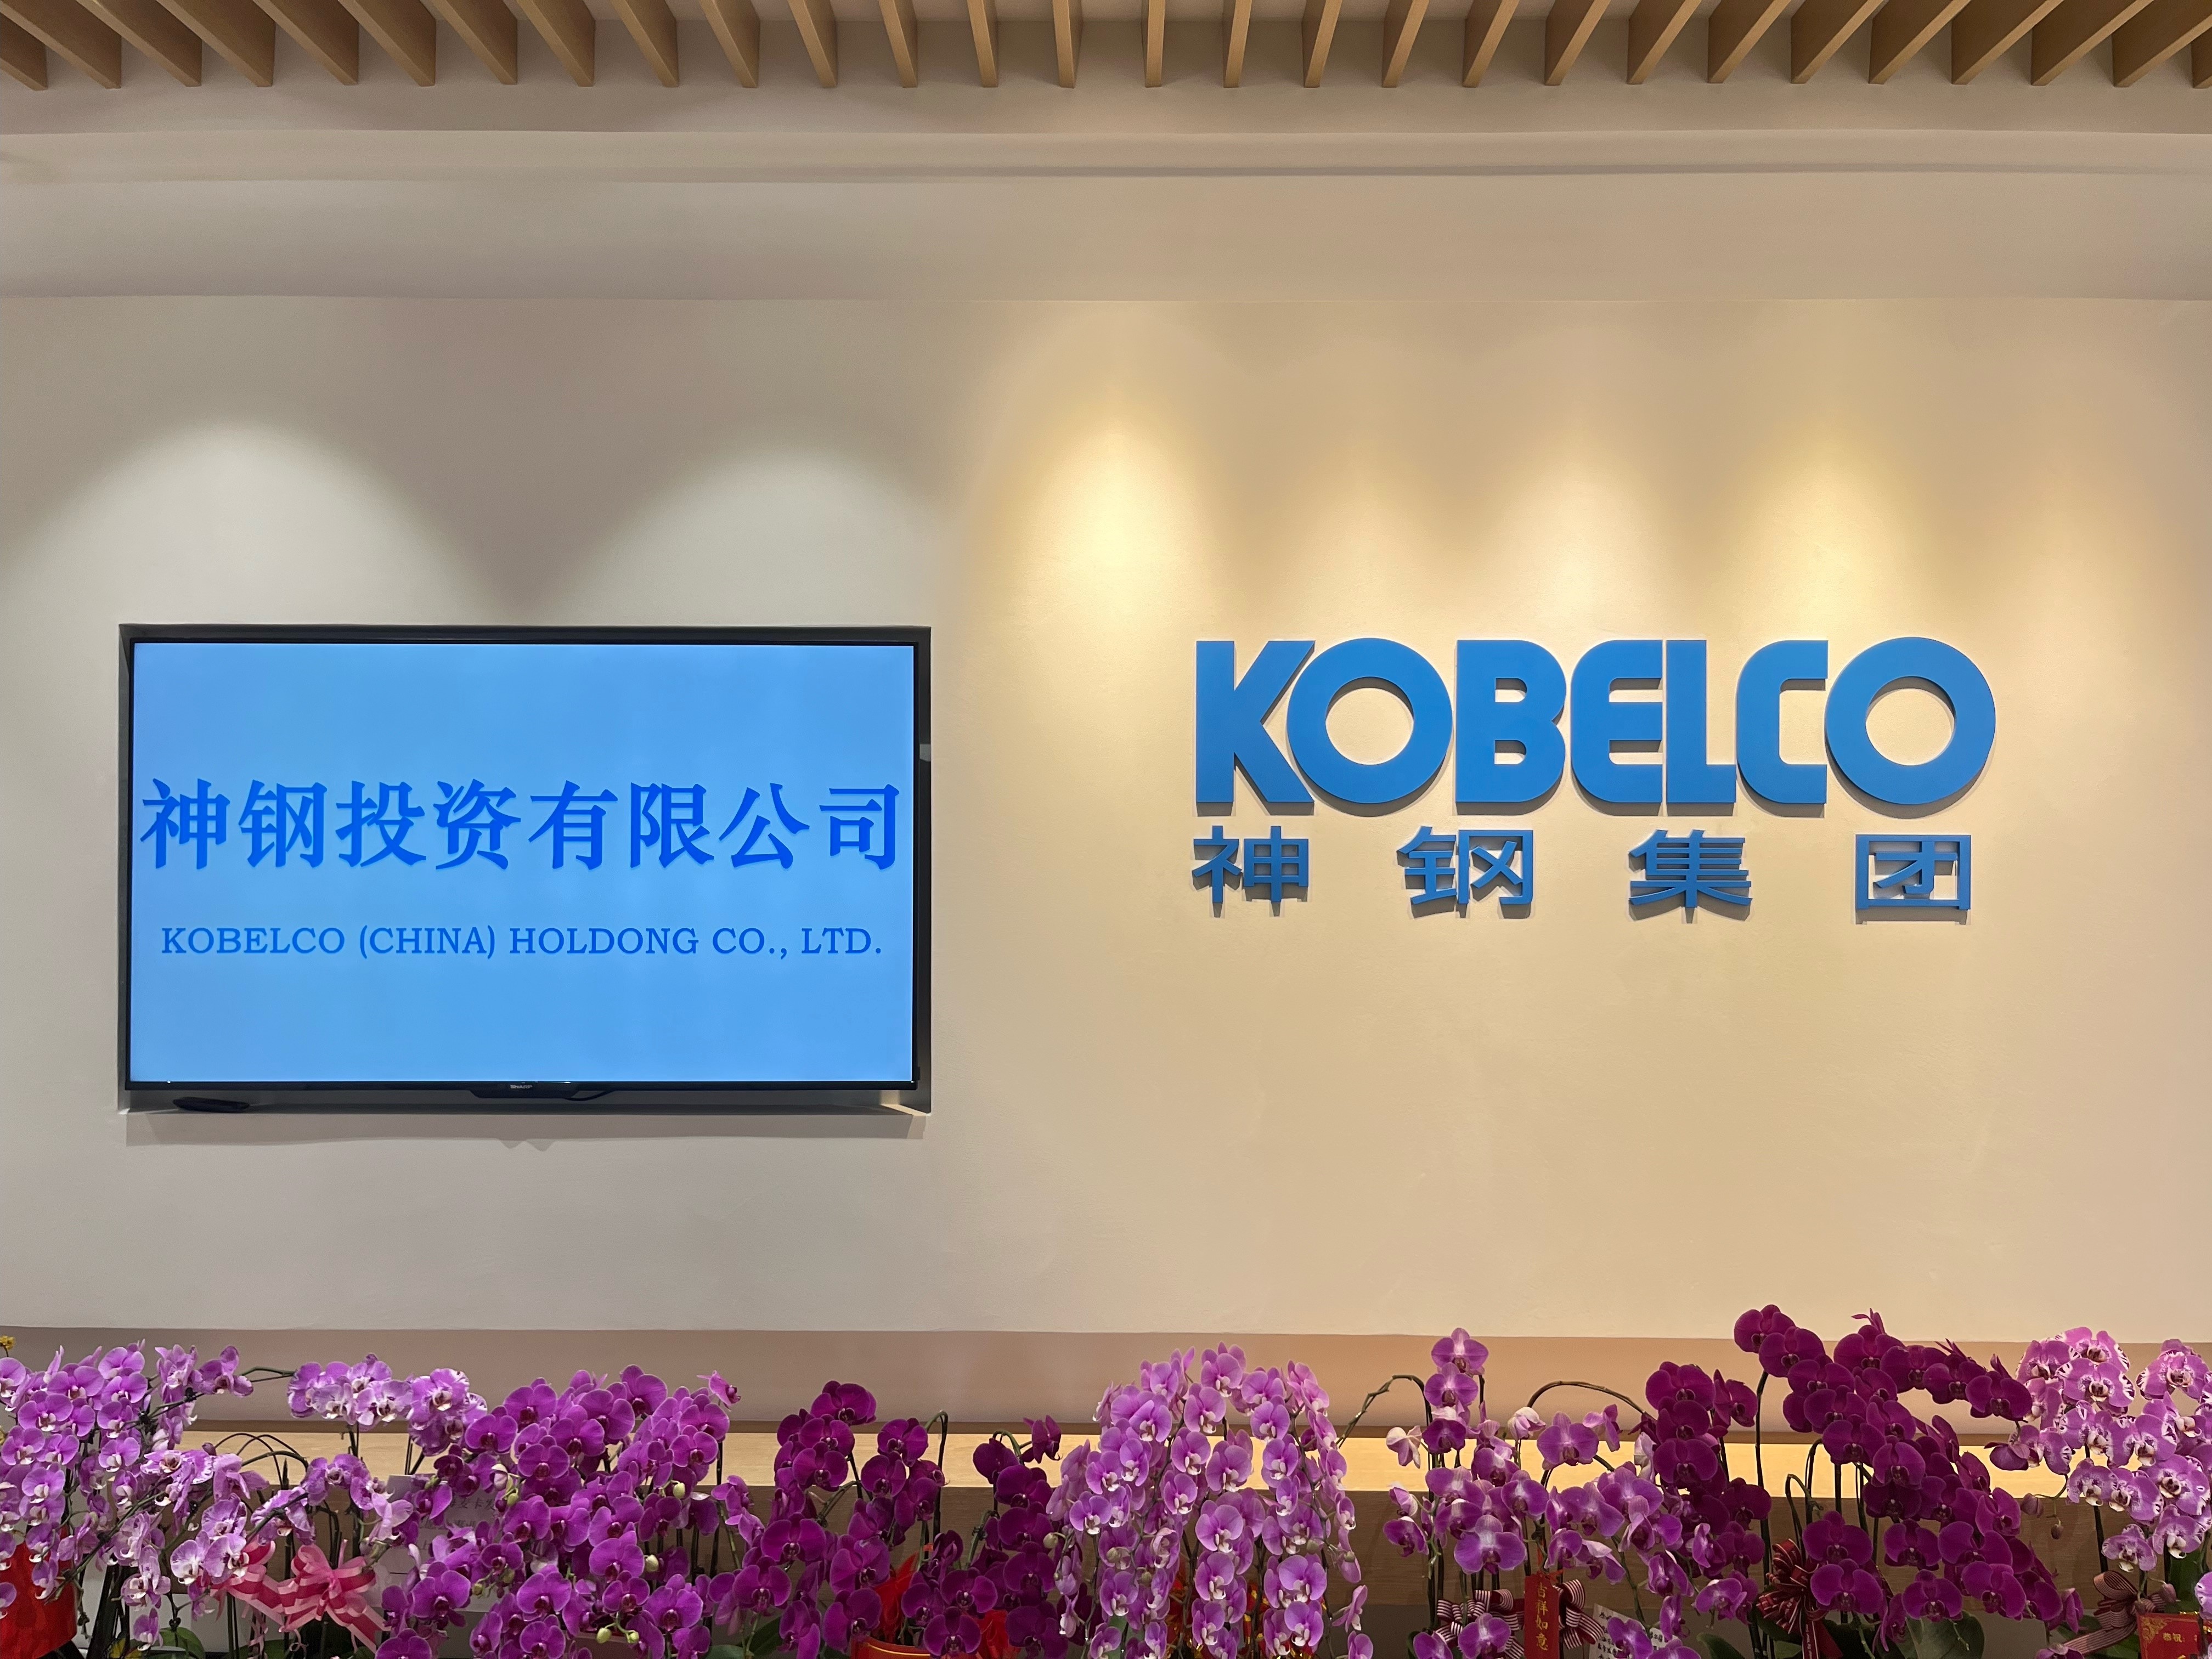 Kobelco (China) Holding Co., Ltd. (China headquarters, investment company)